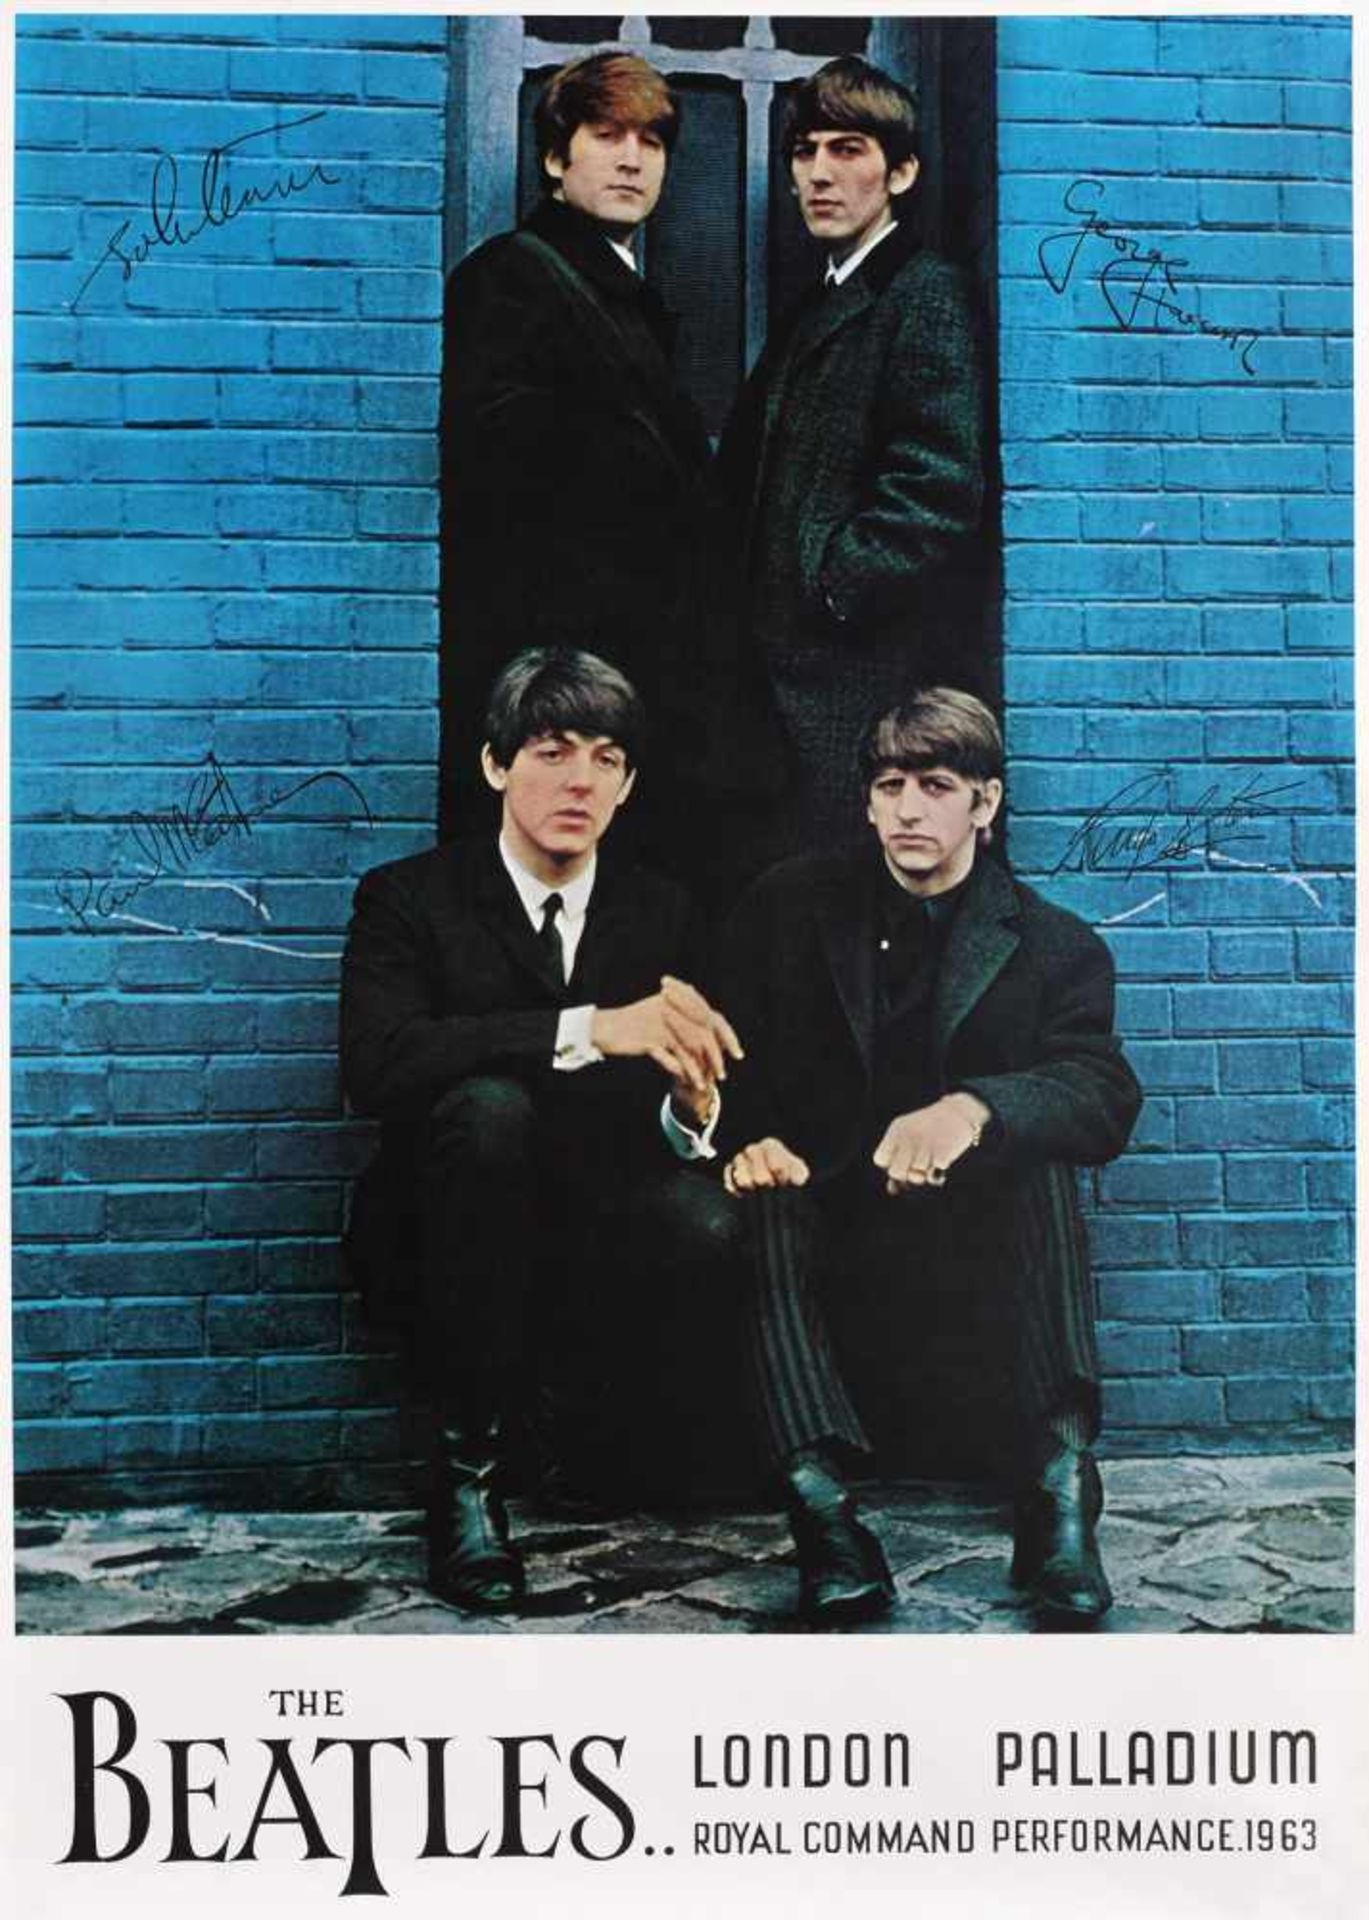 The Beatles - London Palladium concert promotion poster